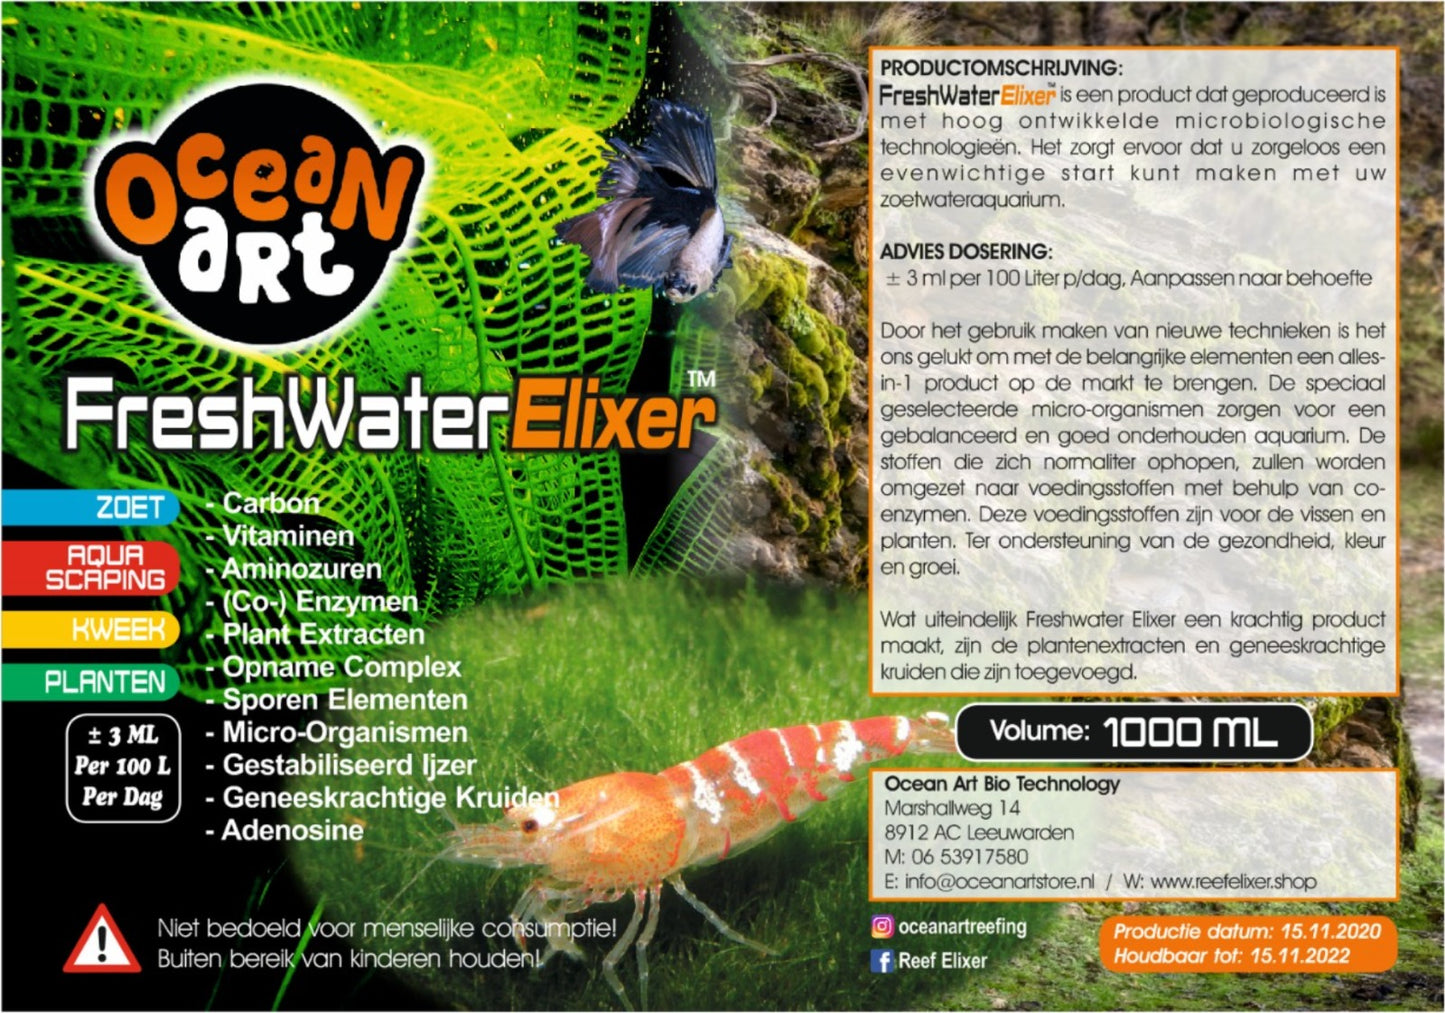 Freshwater Elixer